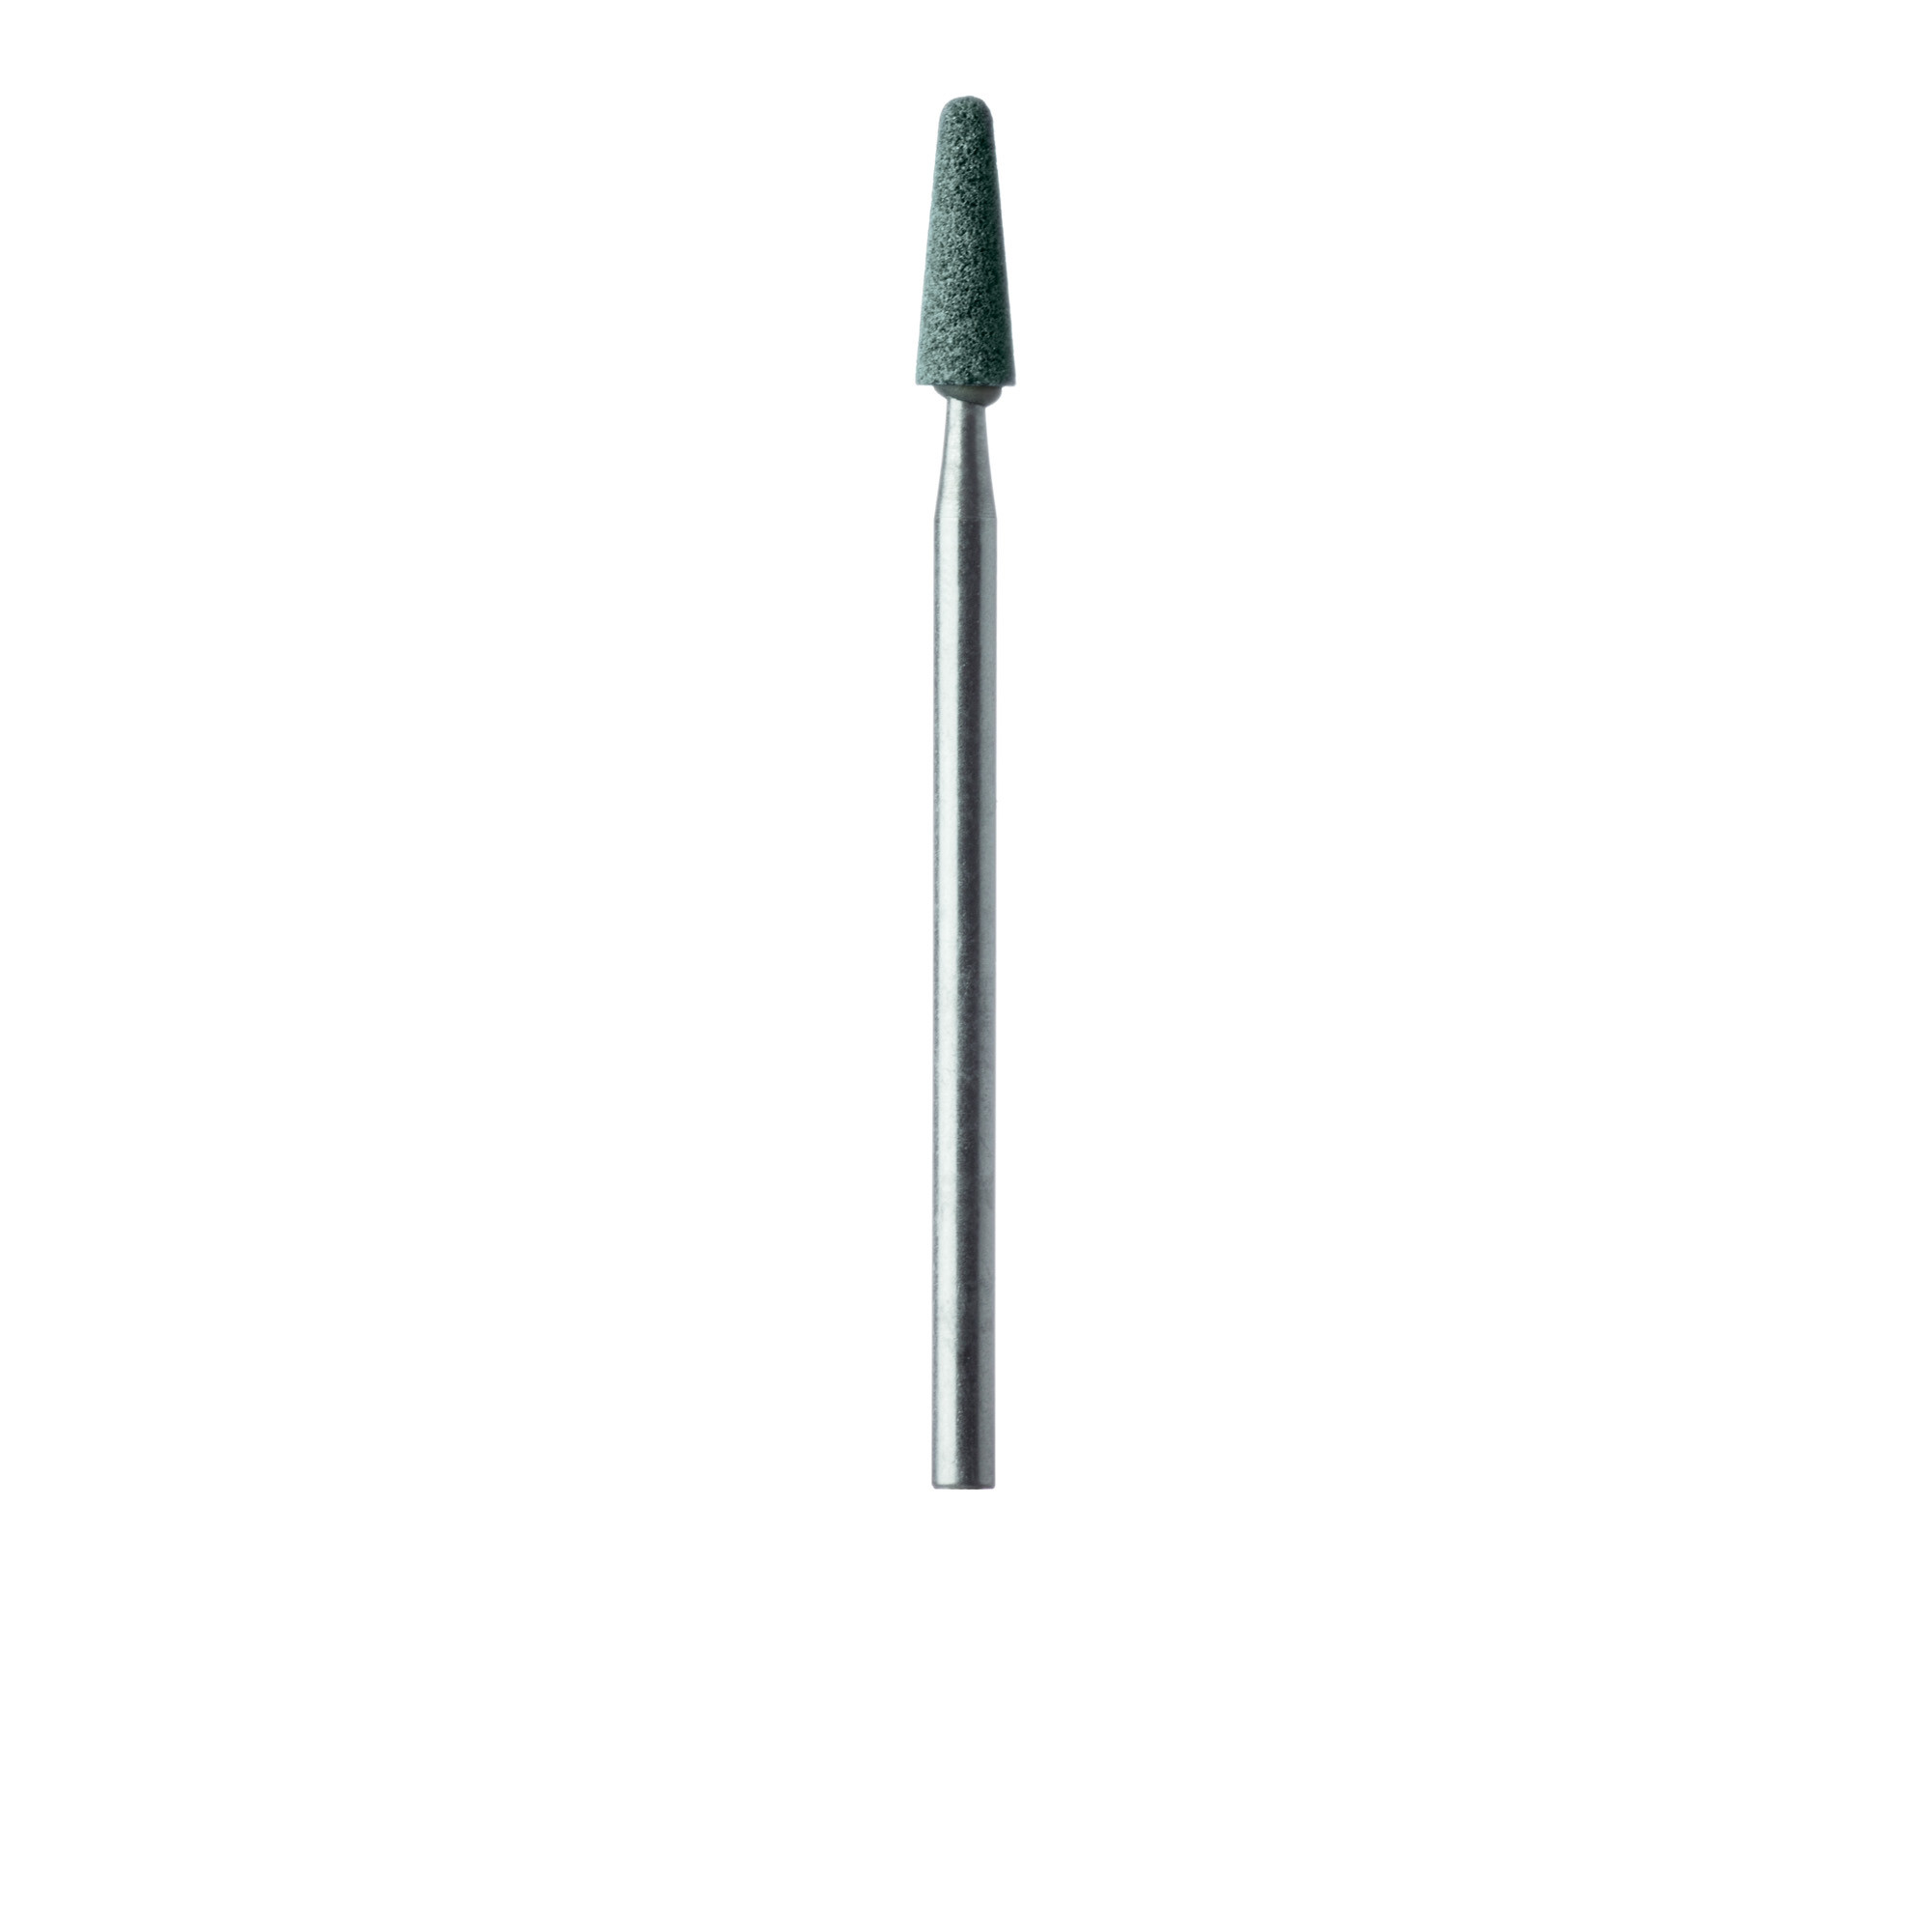 652R-035-HP-GRN Abrasive, Green, 3.5mm Ø, Round End Taper, HP